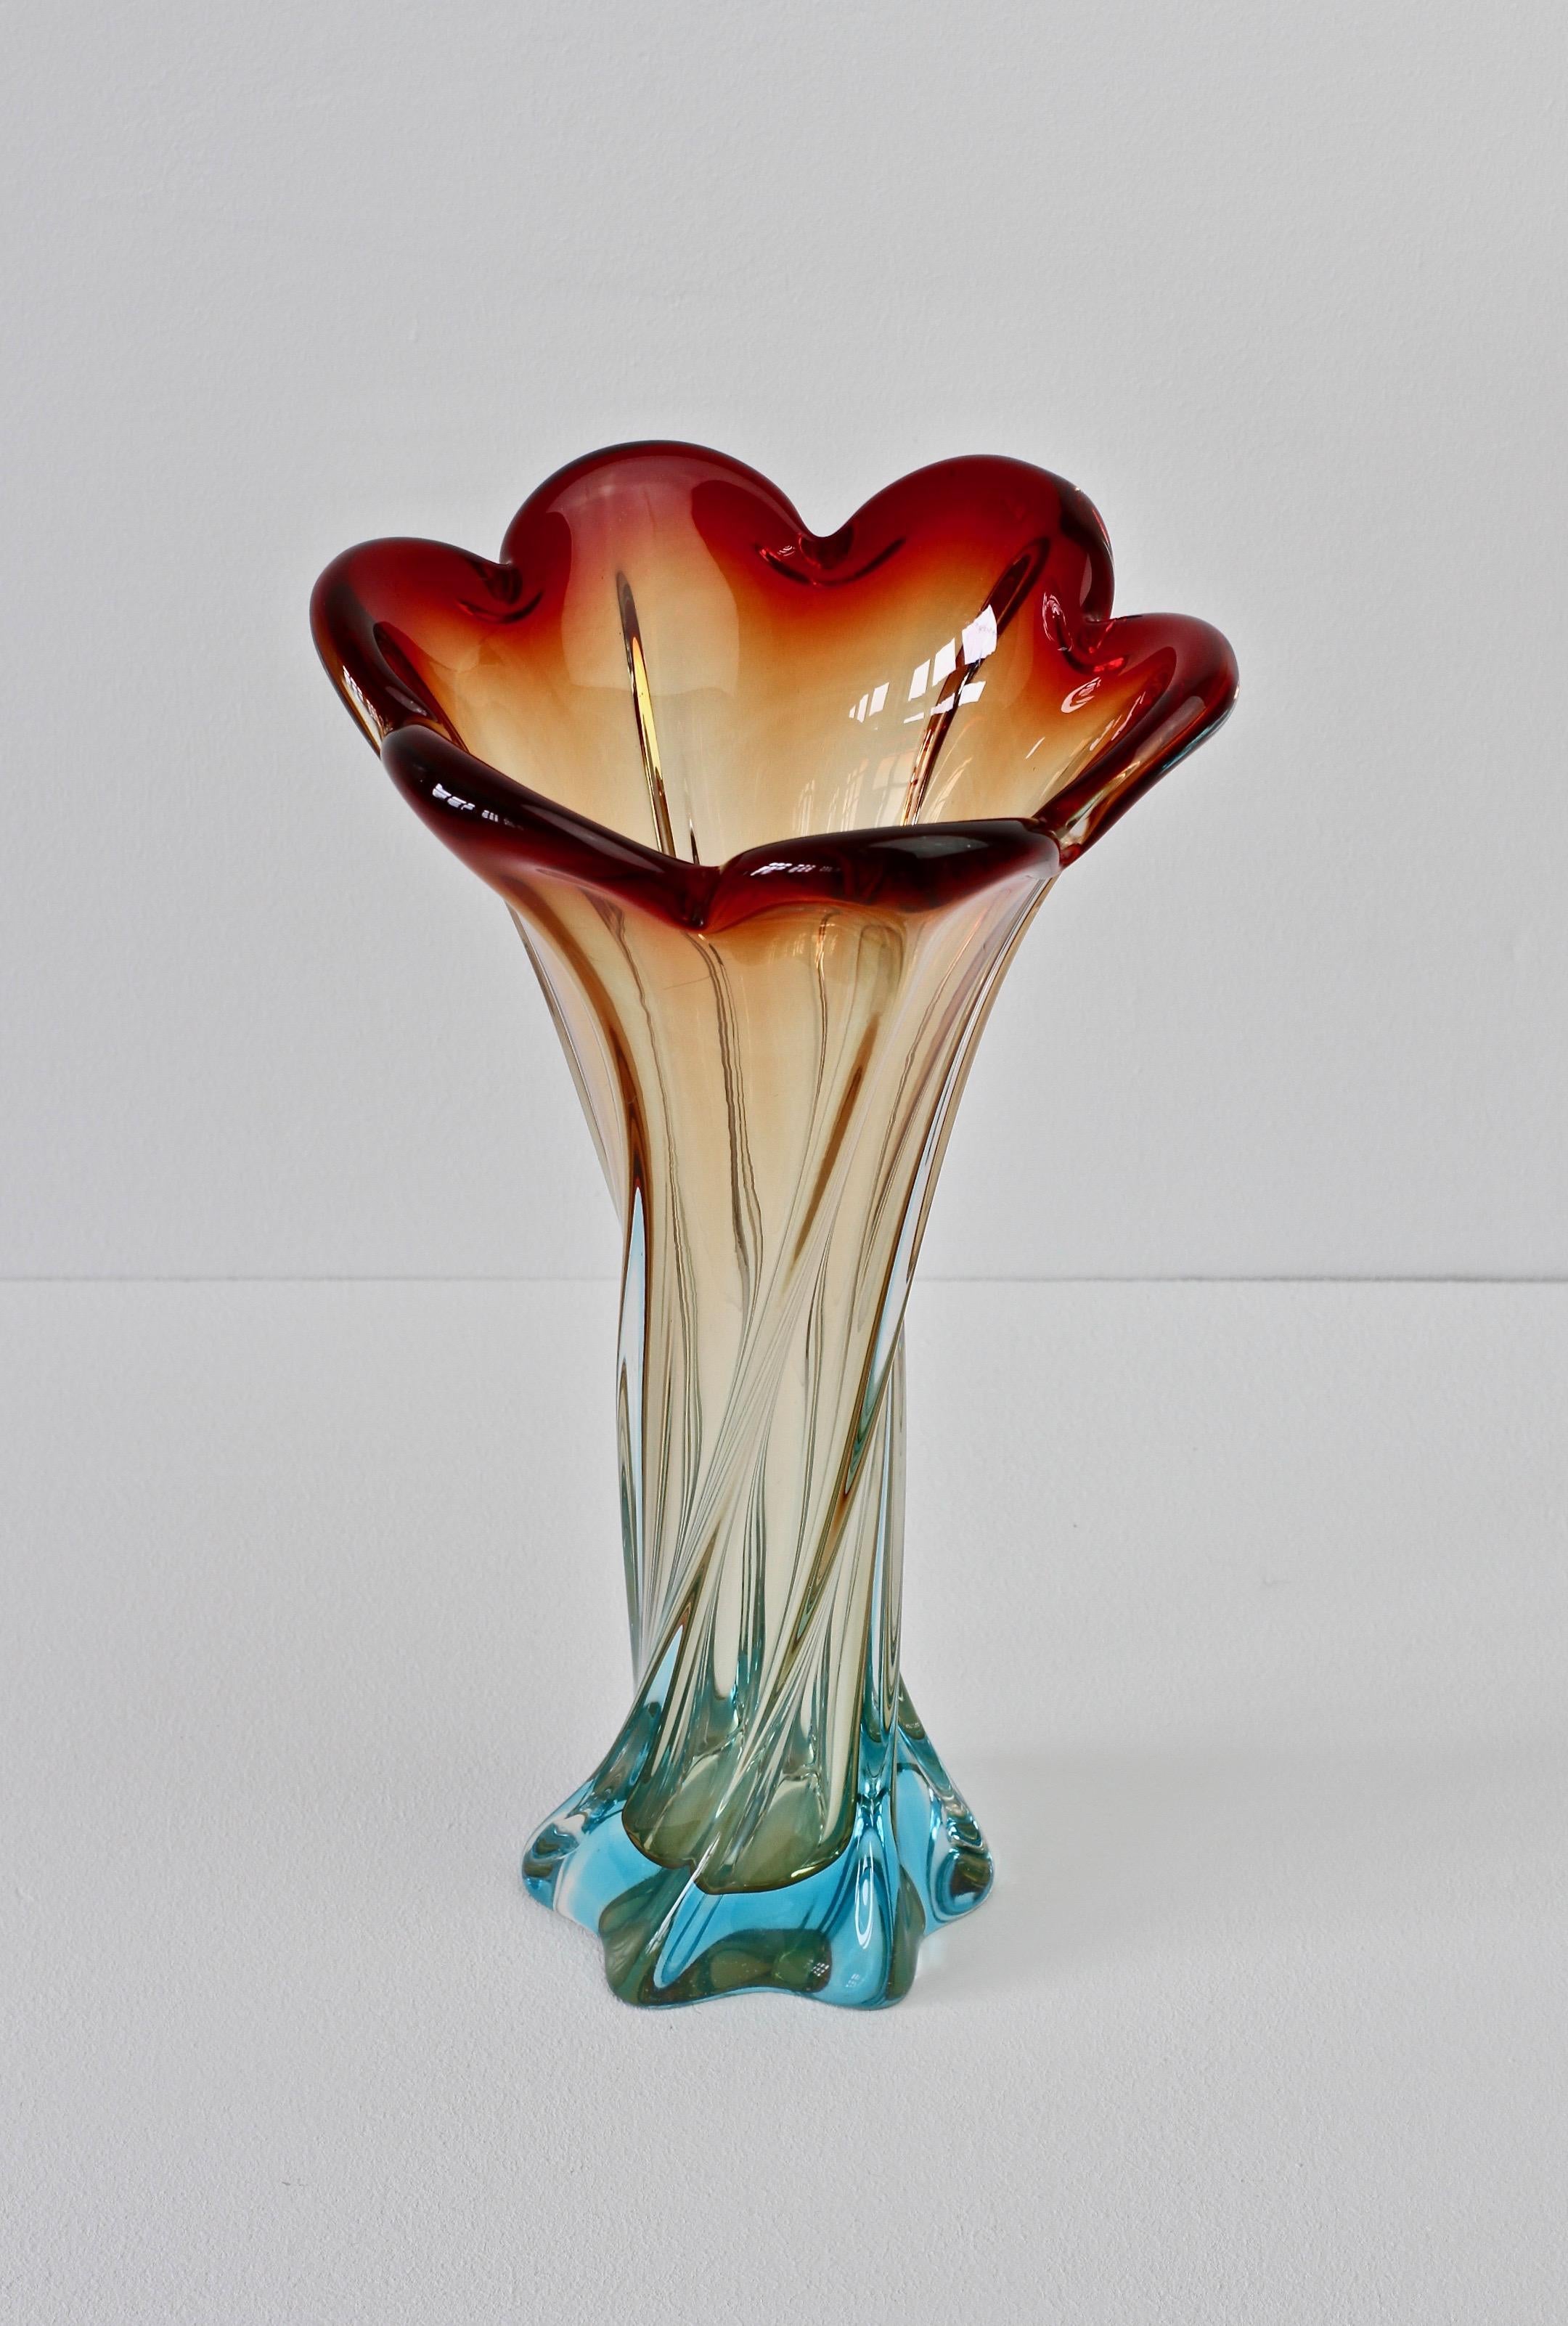 old murano glass vases